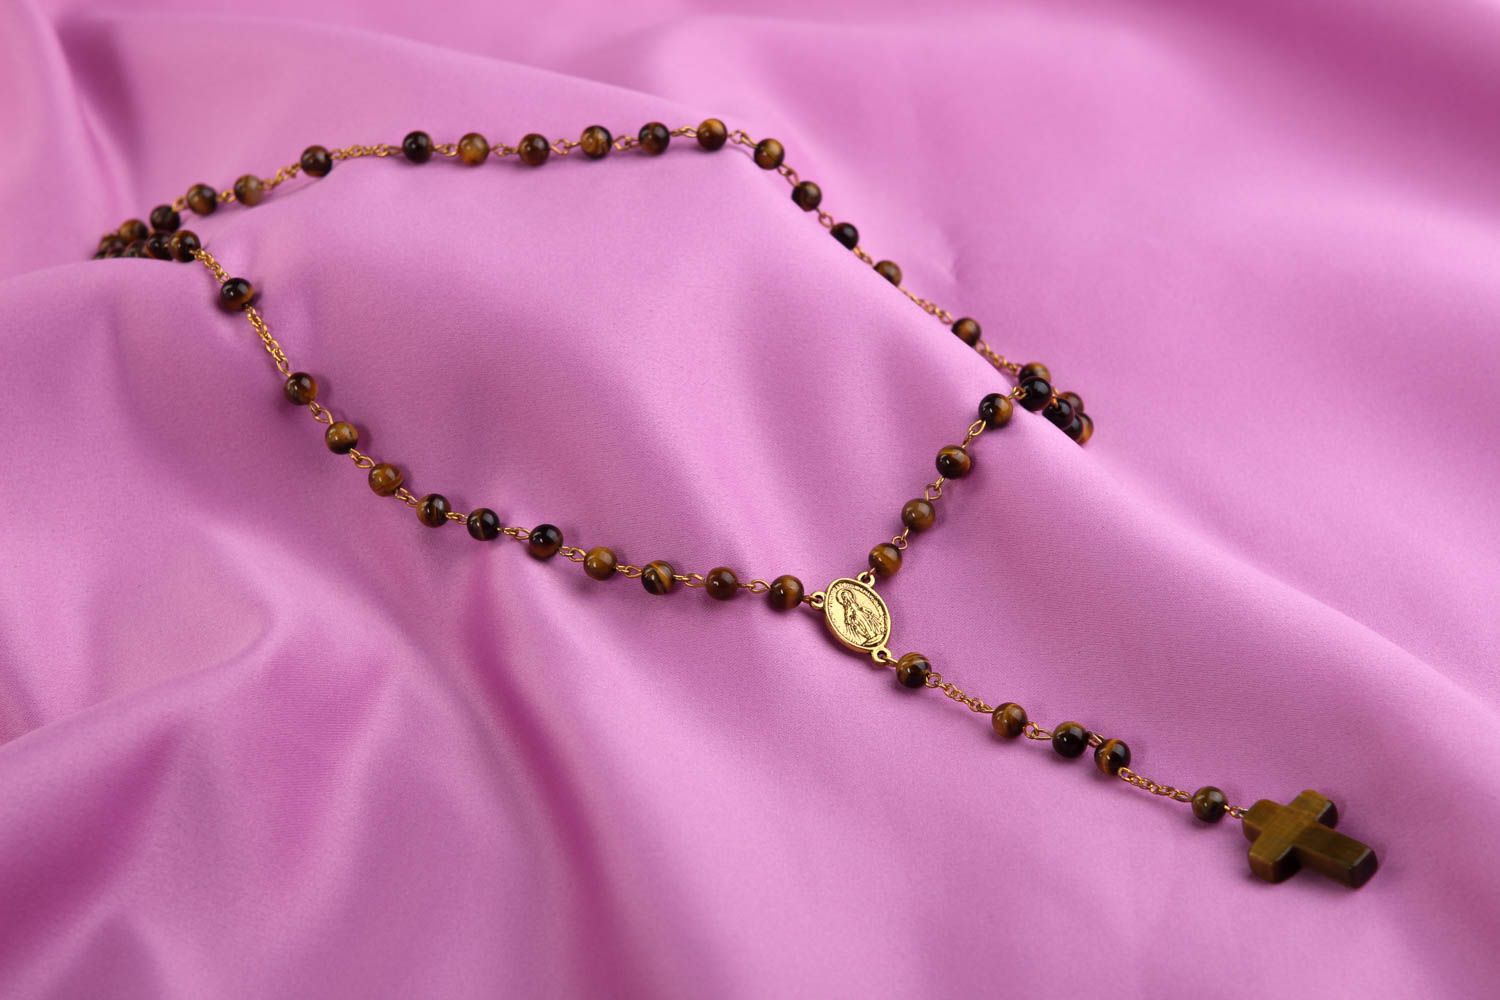 Handmade bead necklace designer rosary gift ideas natural stones accessory photo 1